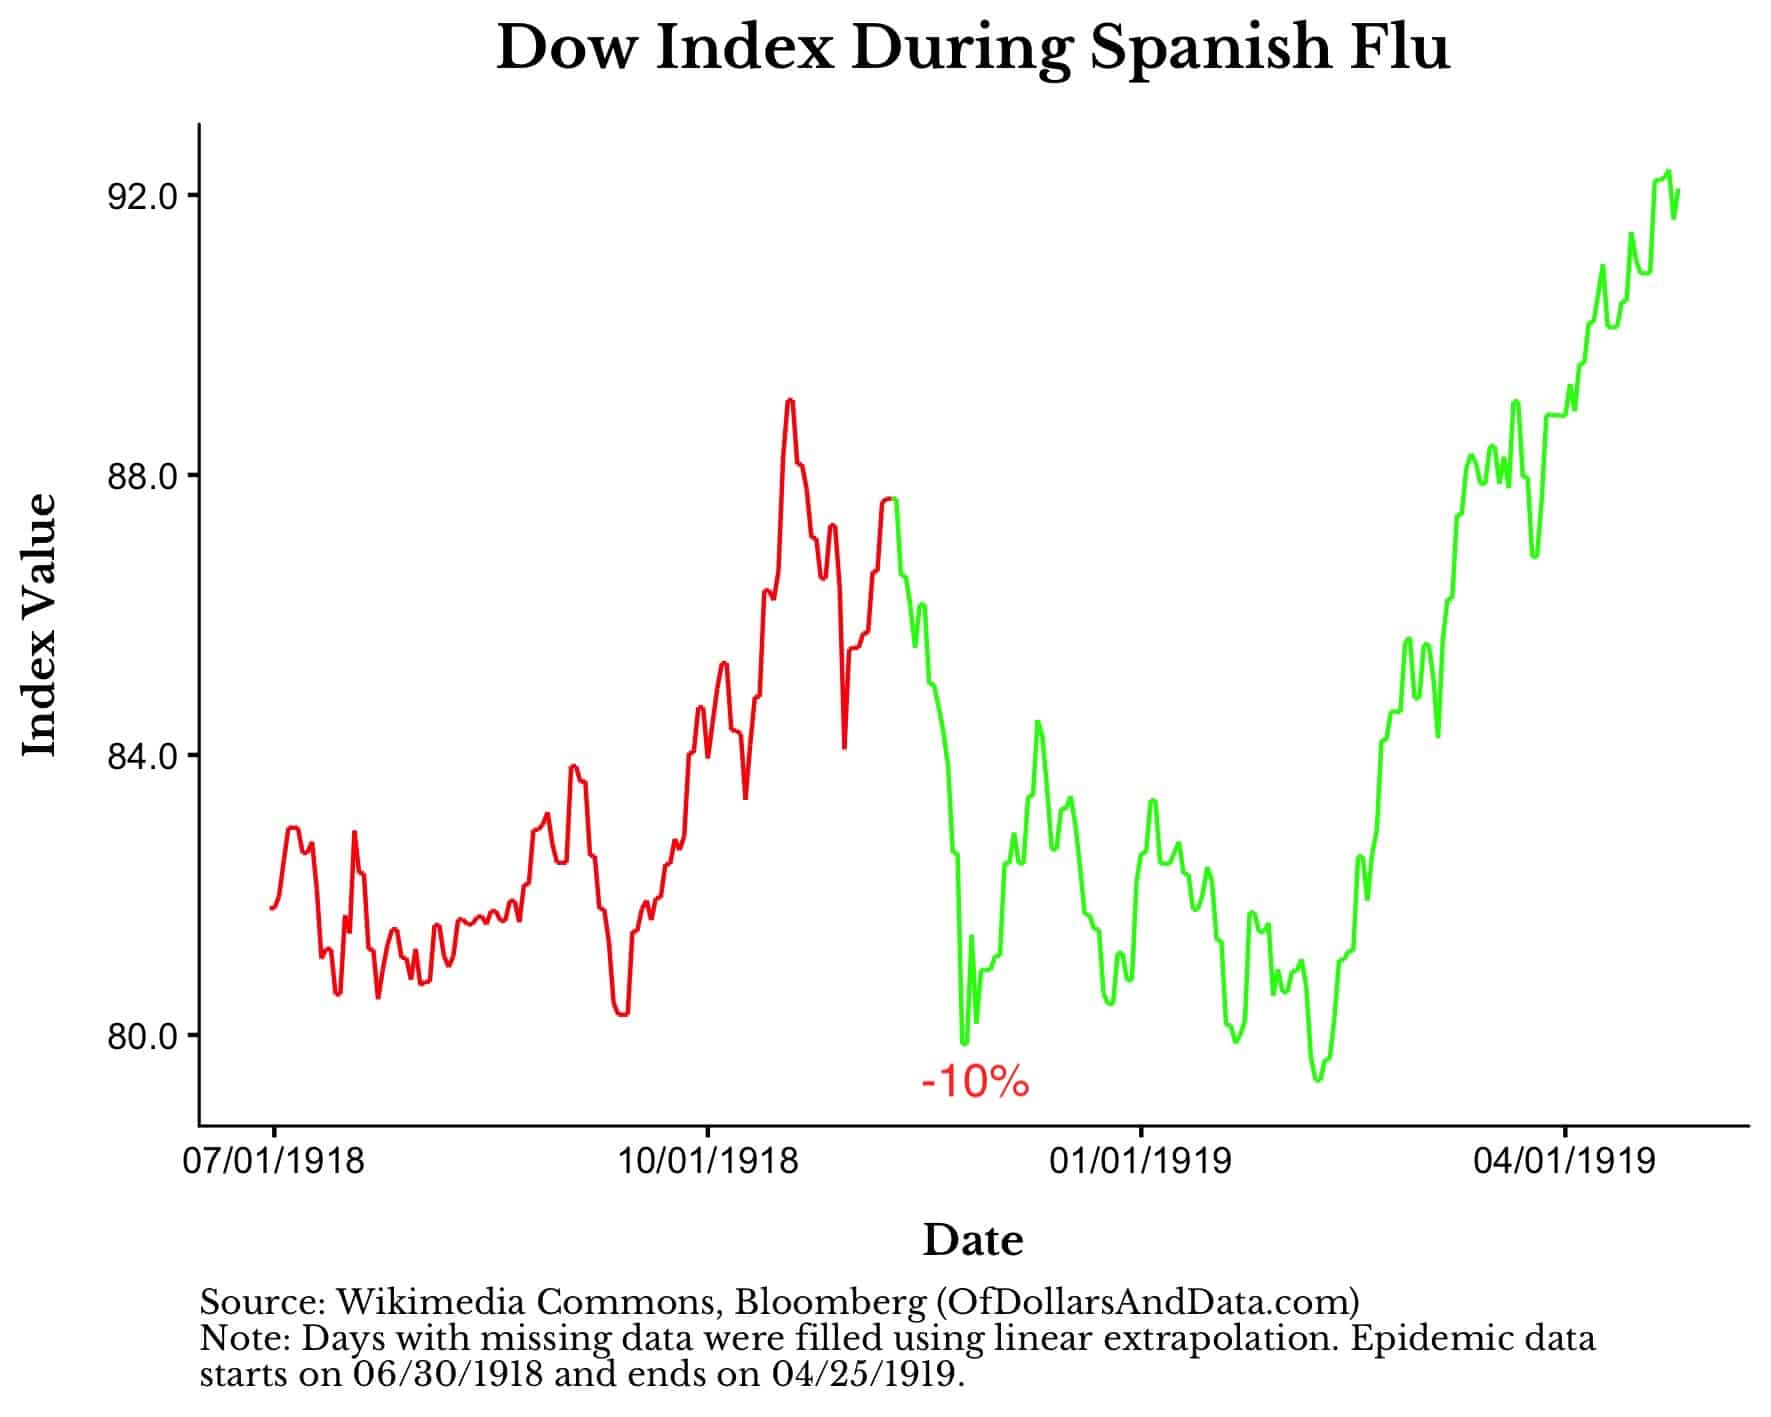 Dow Jones Industrial Average during the Spanish flu